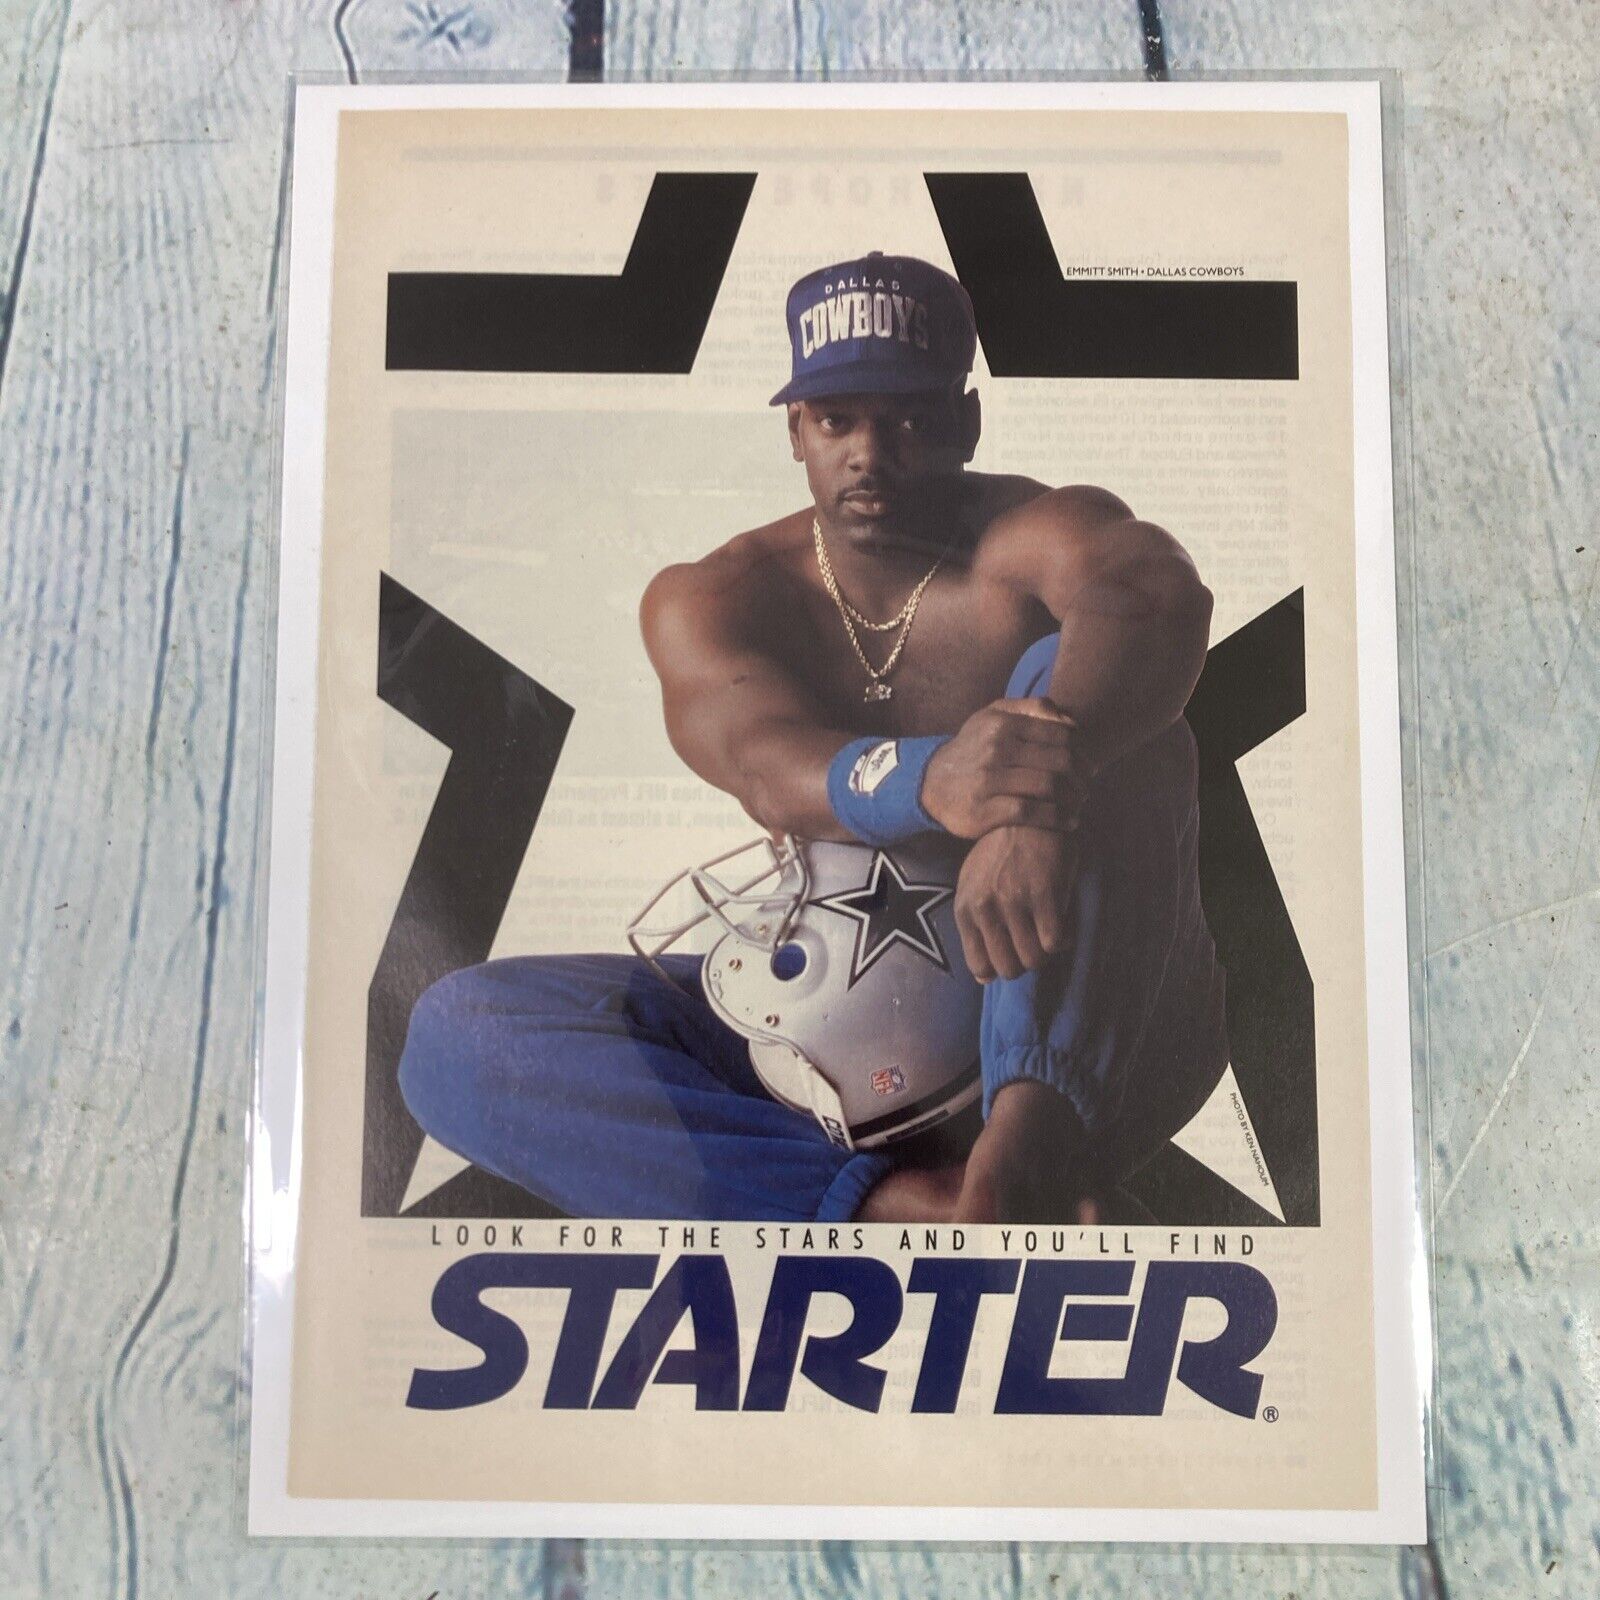 1992 Starter Emmitt Smith Dallas Cowboys Vintage Print Ad/Poster Promo Art